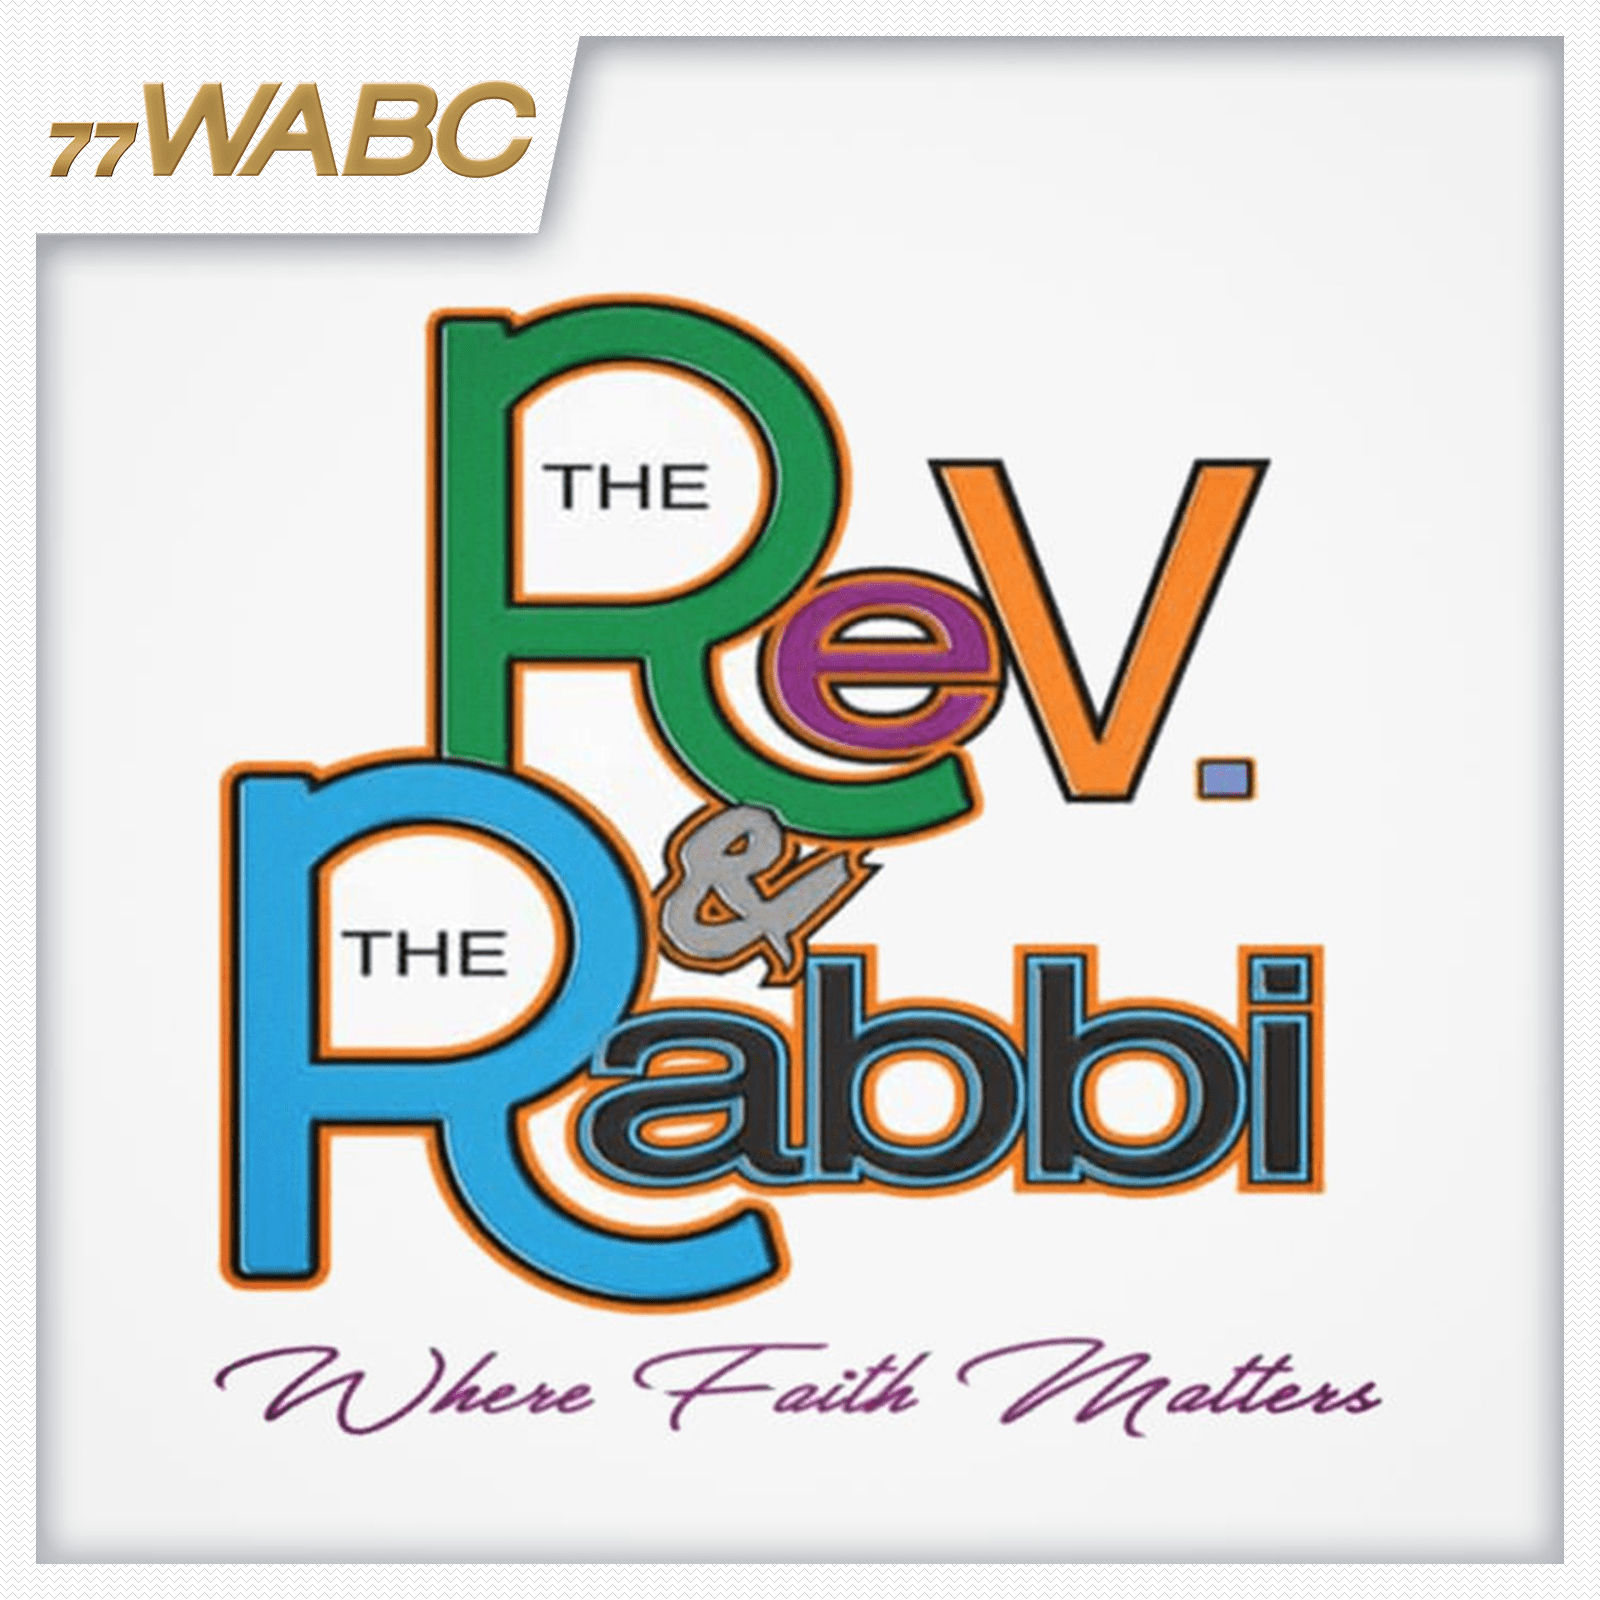 rev-and-the-rabbi-new-logo428486